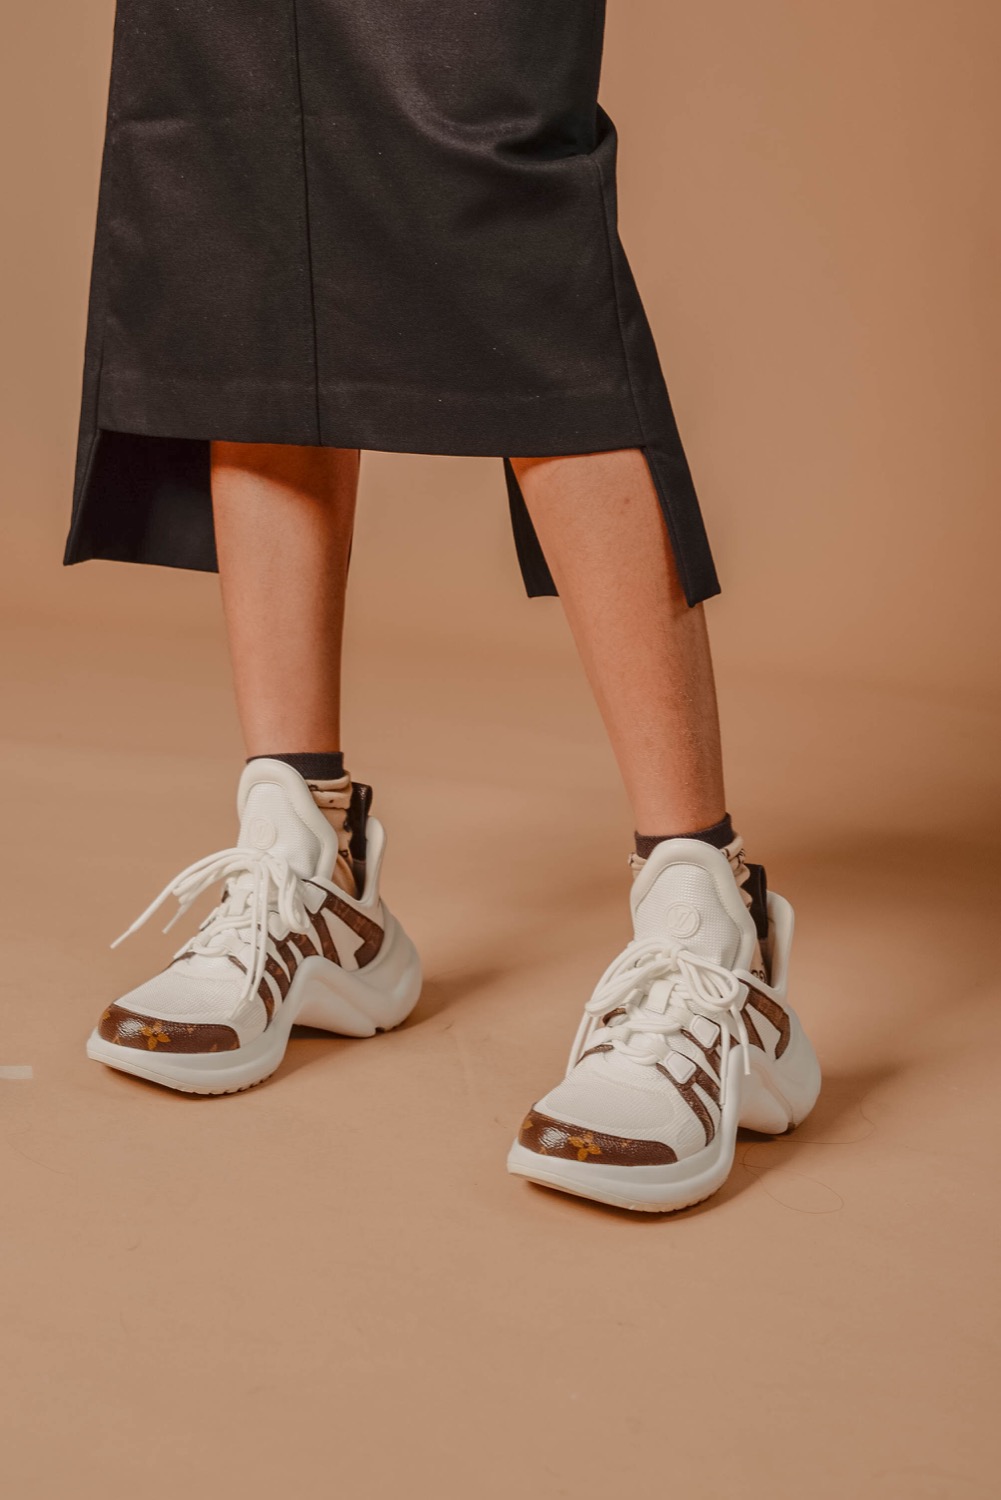 Louis Vuitton Archlight Sneaker - White (for Pre-order) - Selectionne PH